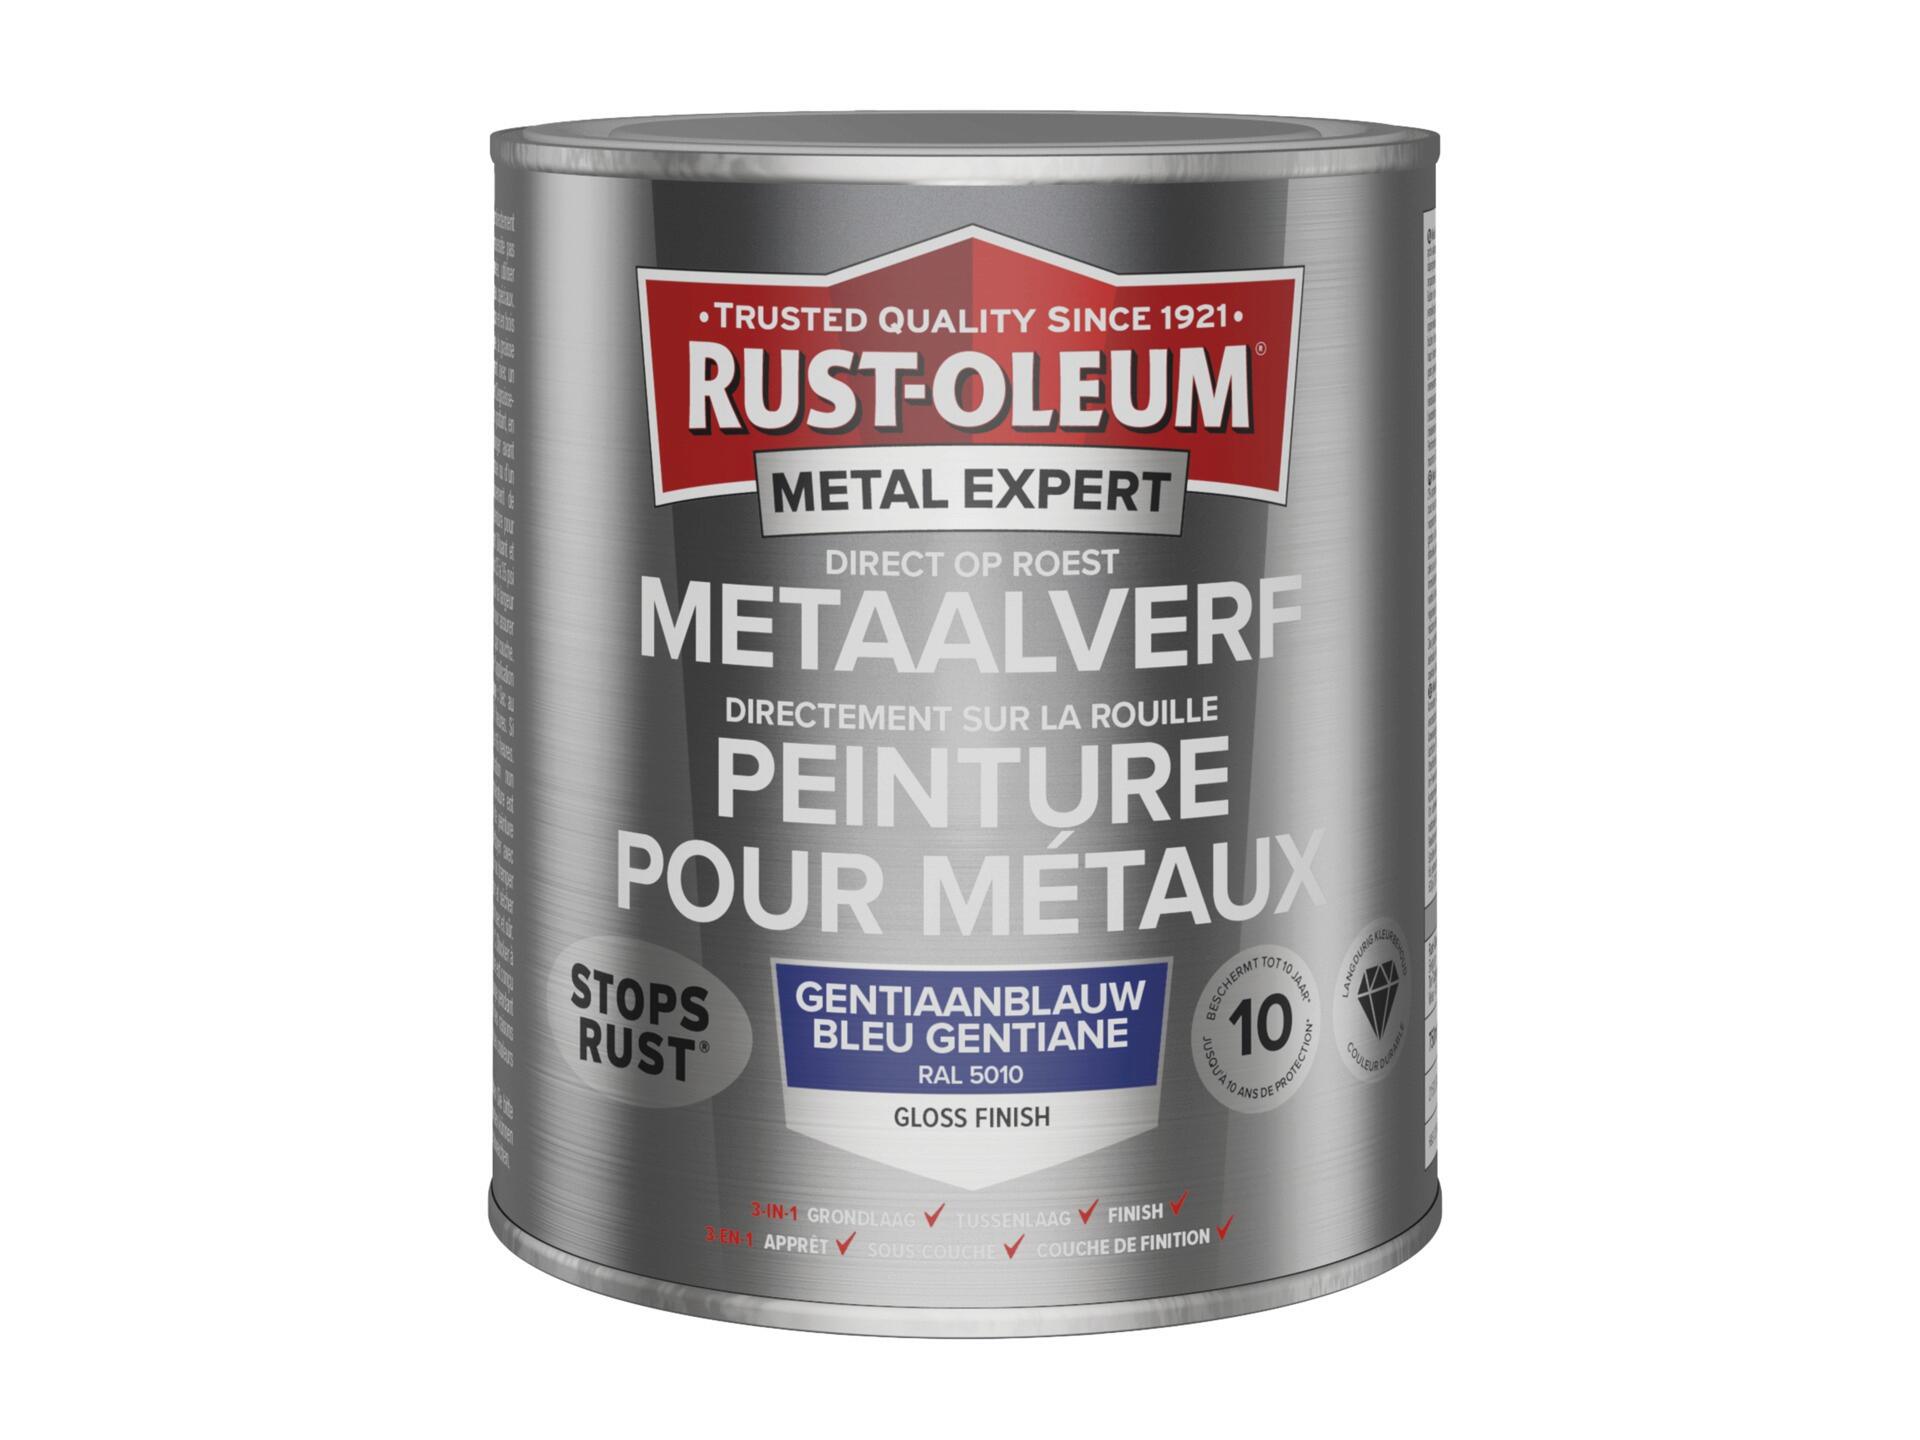 Rust-oleum Metal Expert peinture pour métaux brillant 750ml bleu gentiane